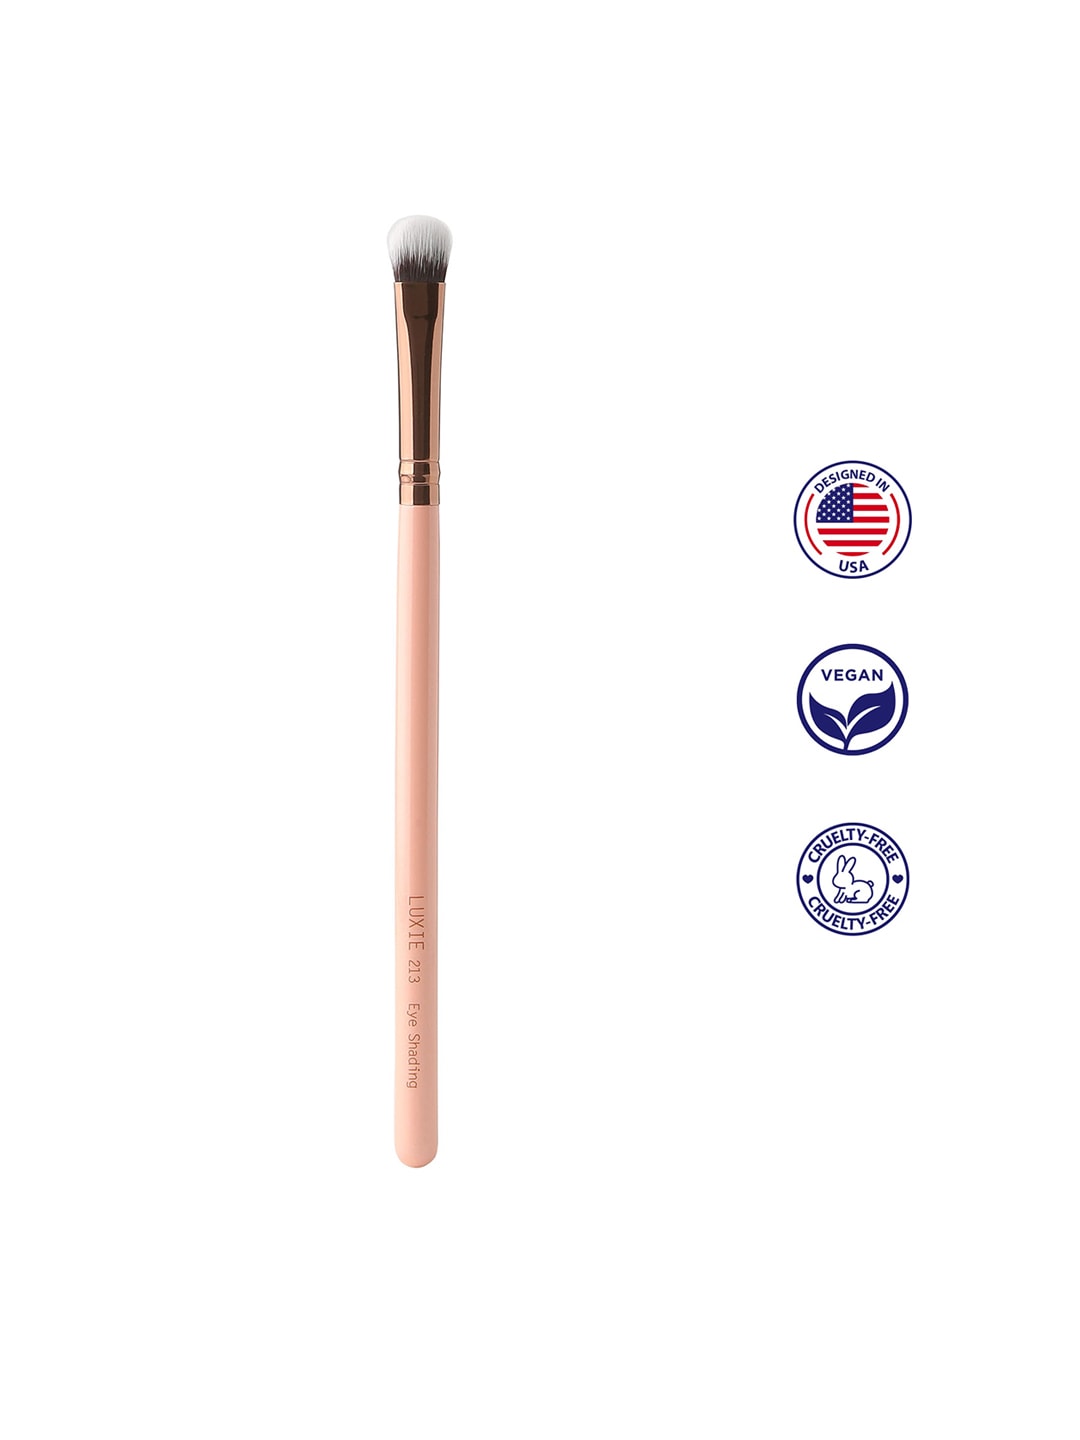 LUXIE Premium Soft Eye Shading Brush - 213 Rose Gold Price in India